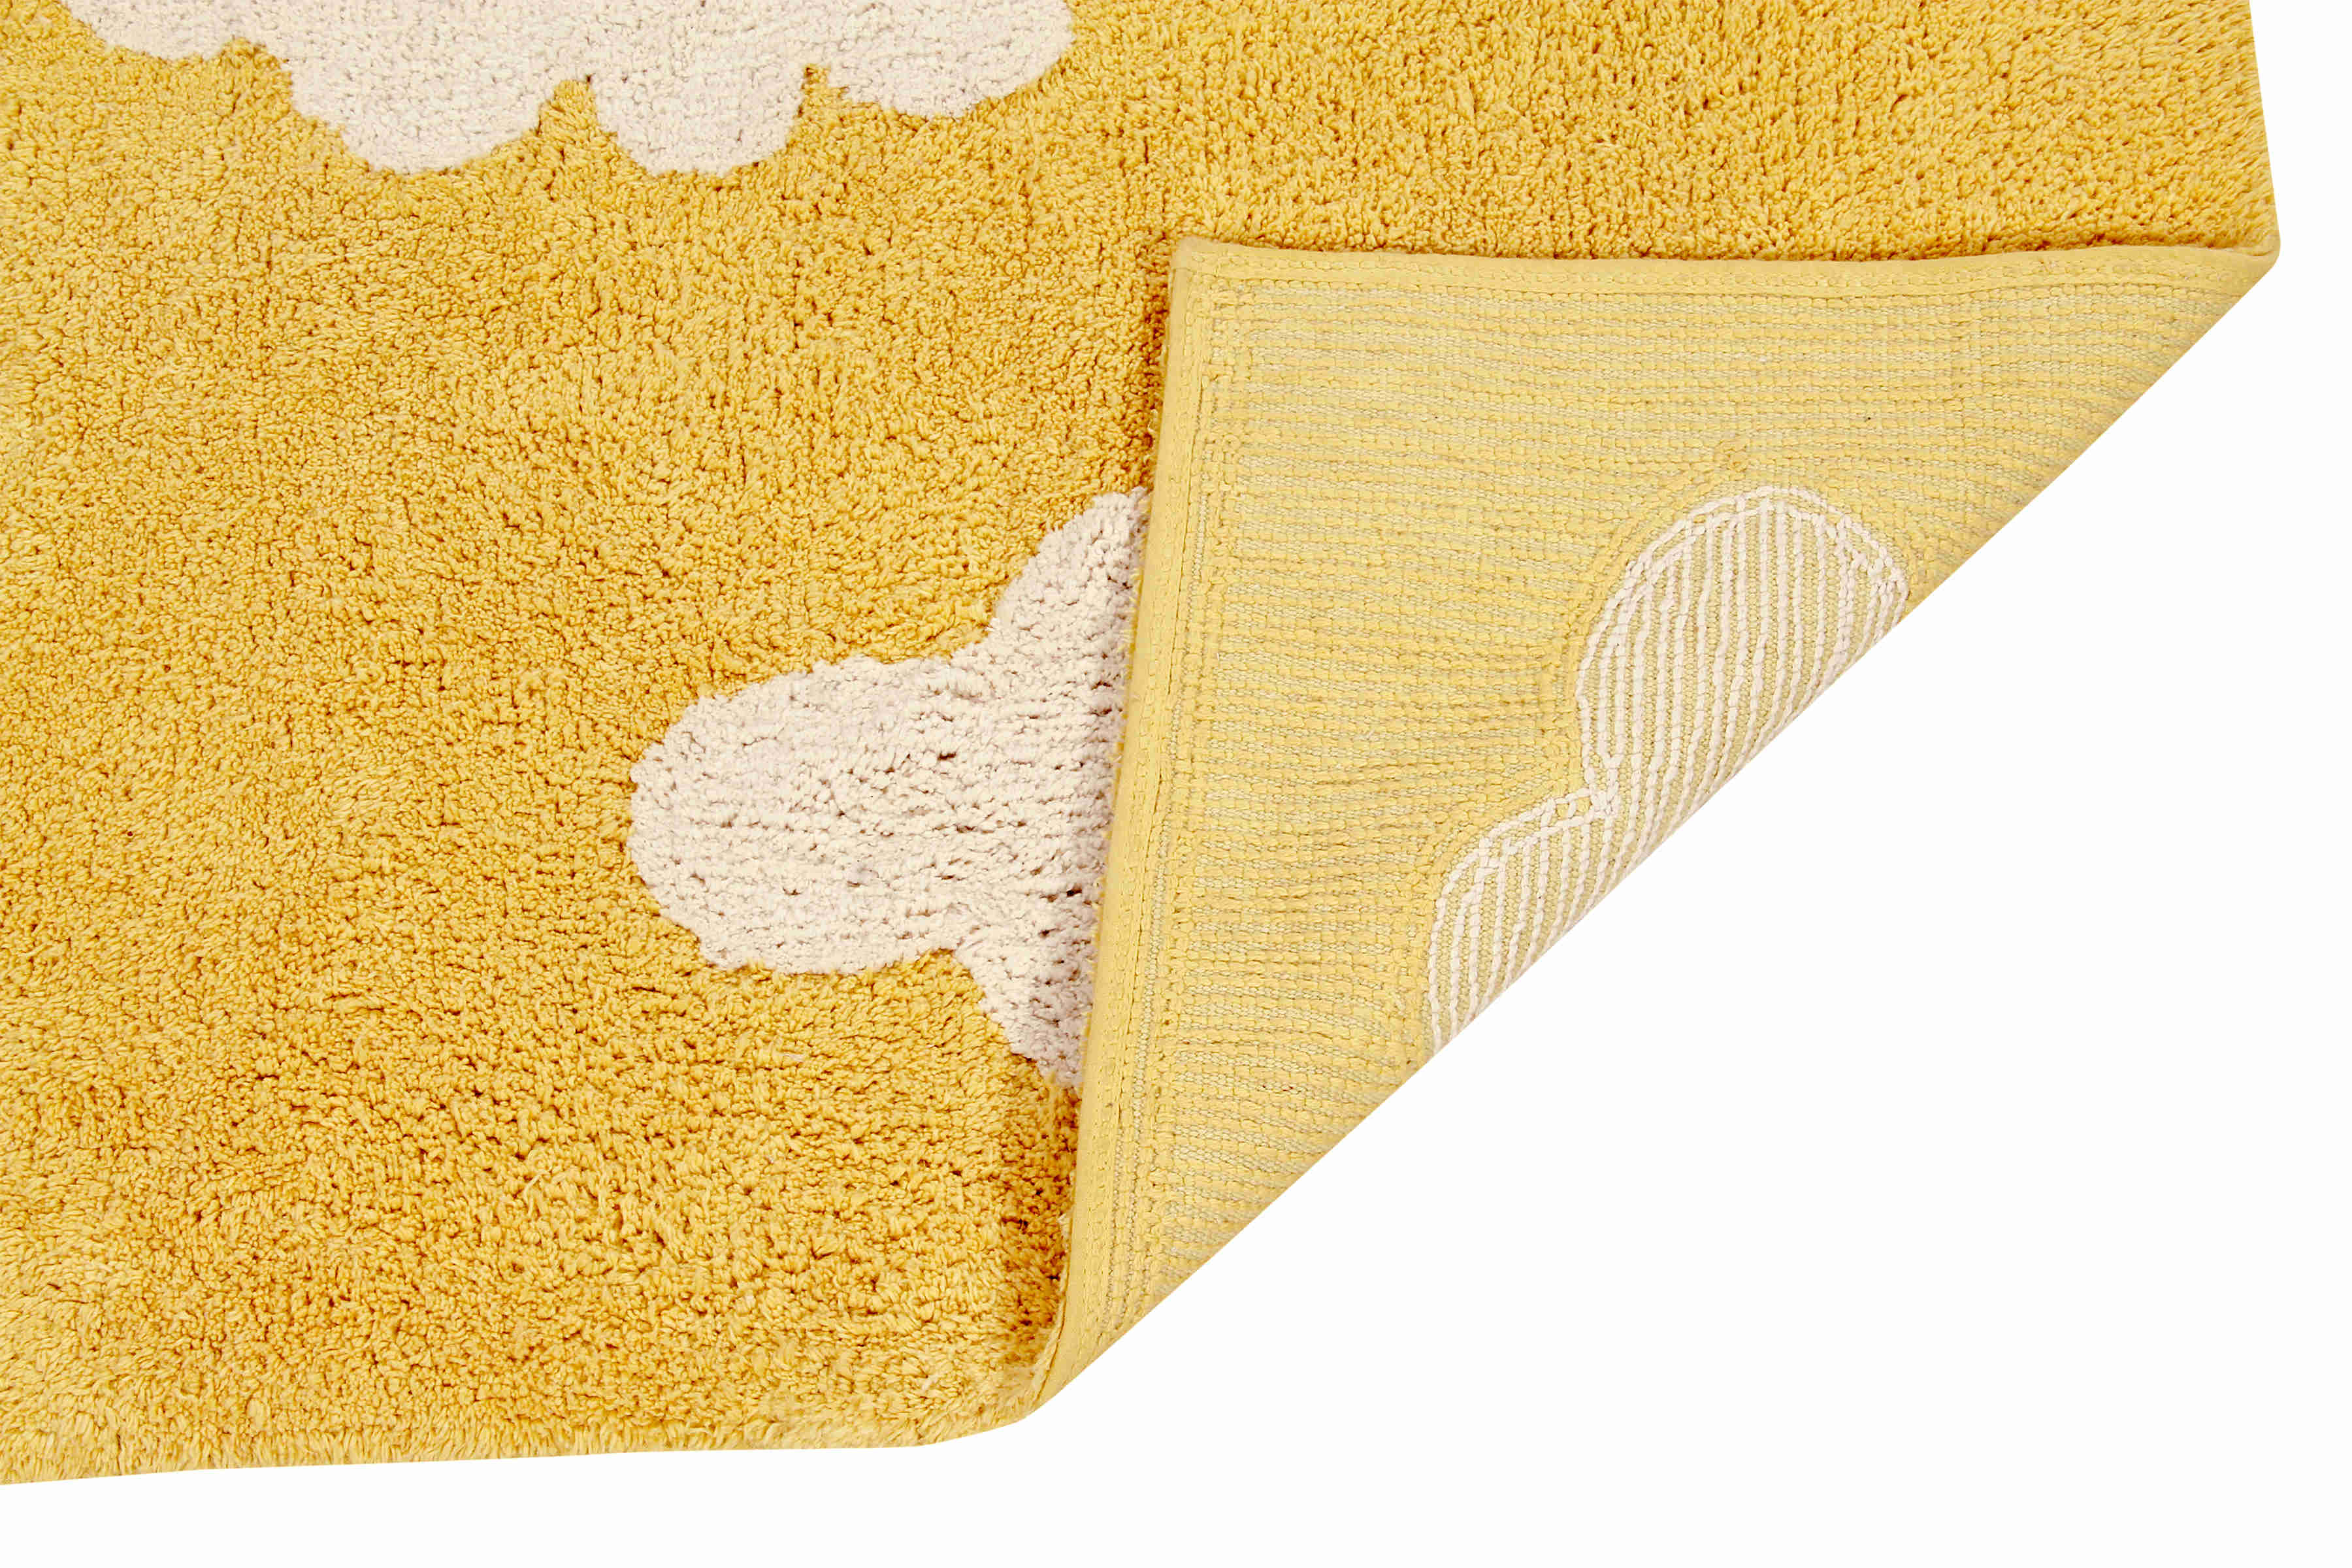 Rectangular yellow cotton rug with white cloud design